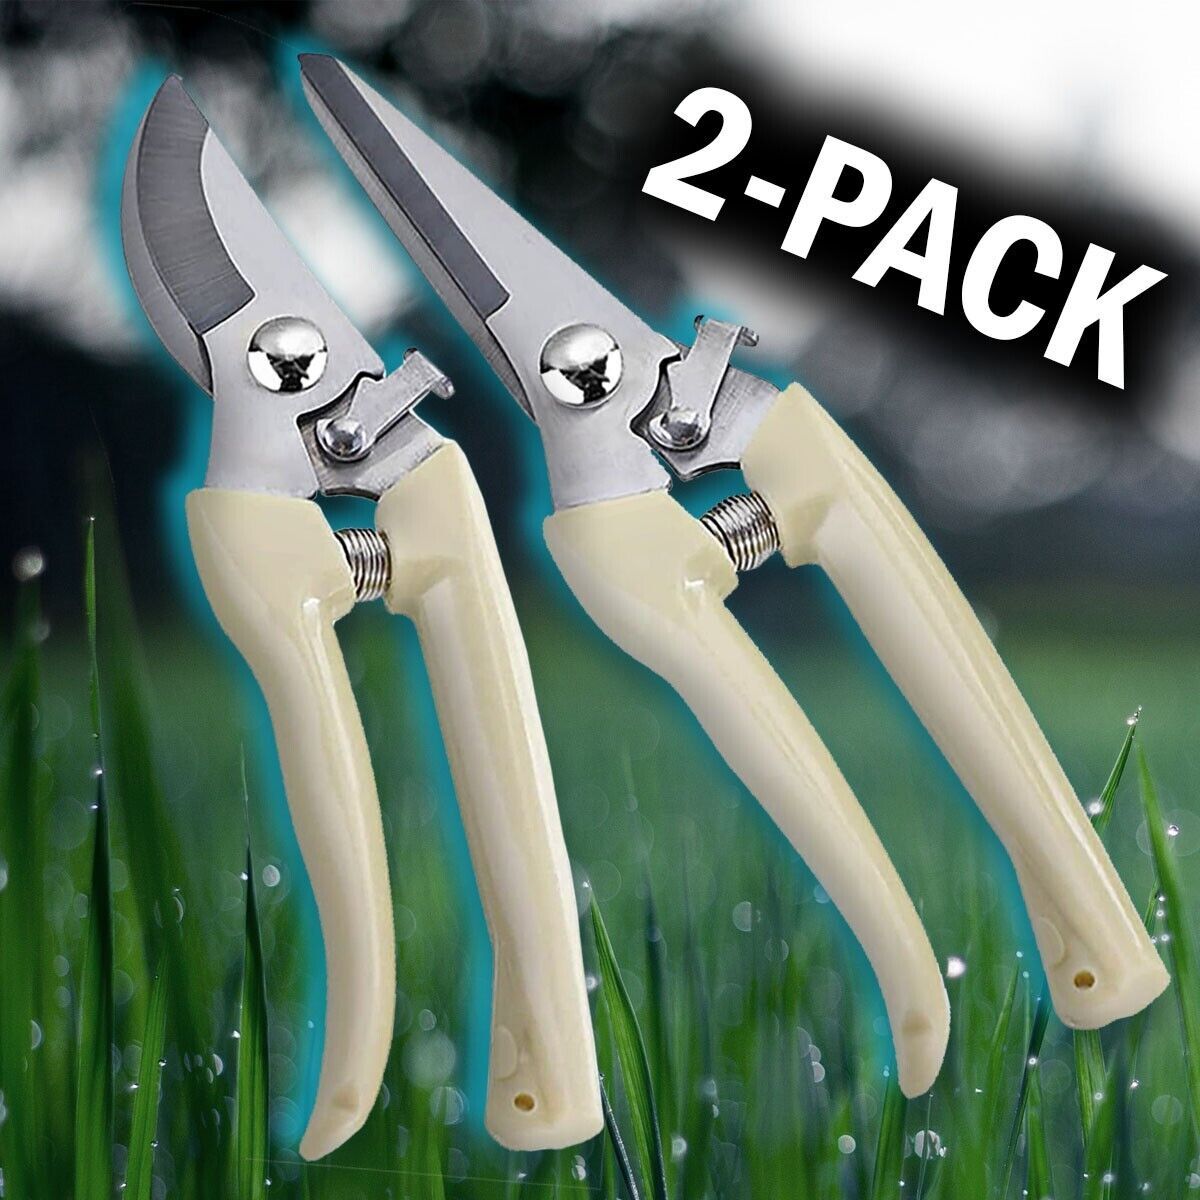 2 Pack Garden Pruning Shears Set Bypass Branch Pruner Straight Blade Scissors US